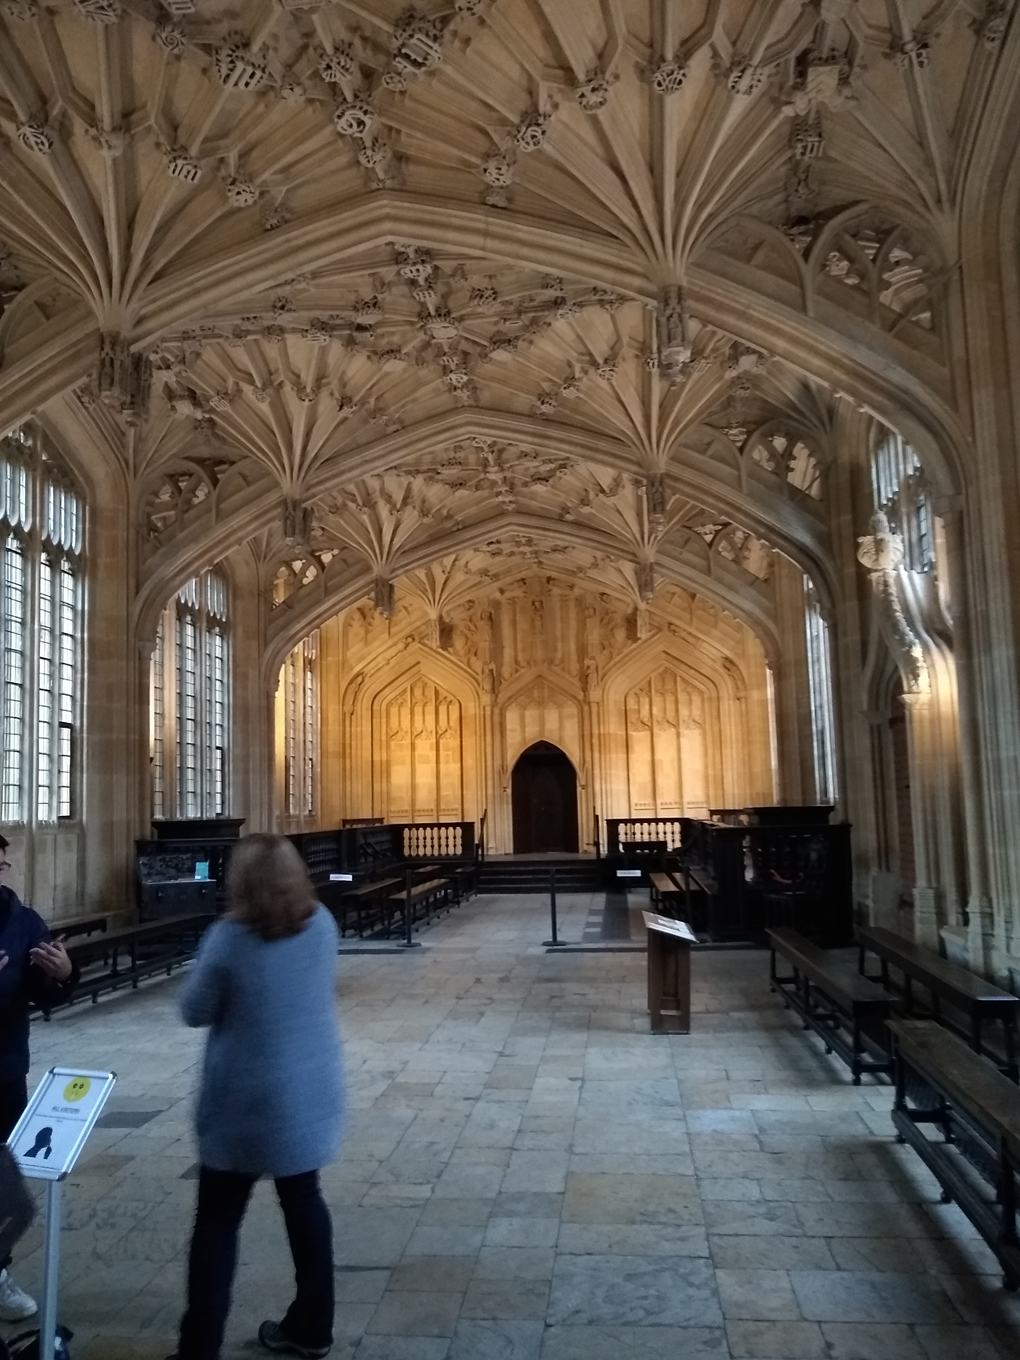 Divinity school, Oxford